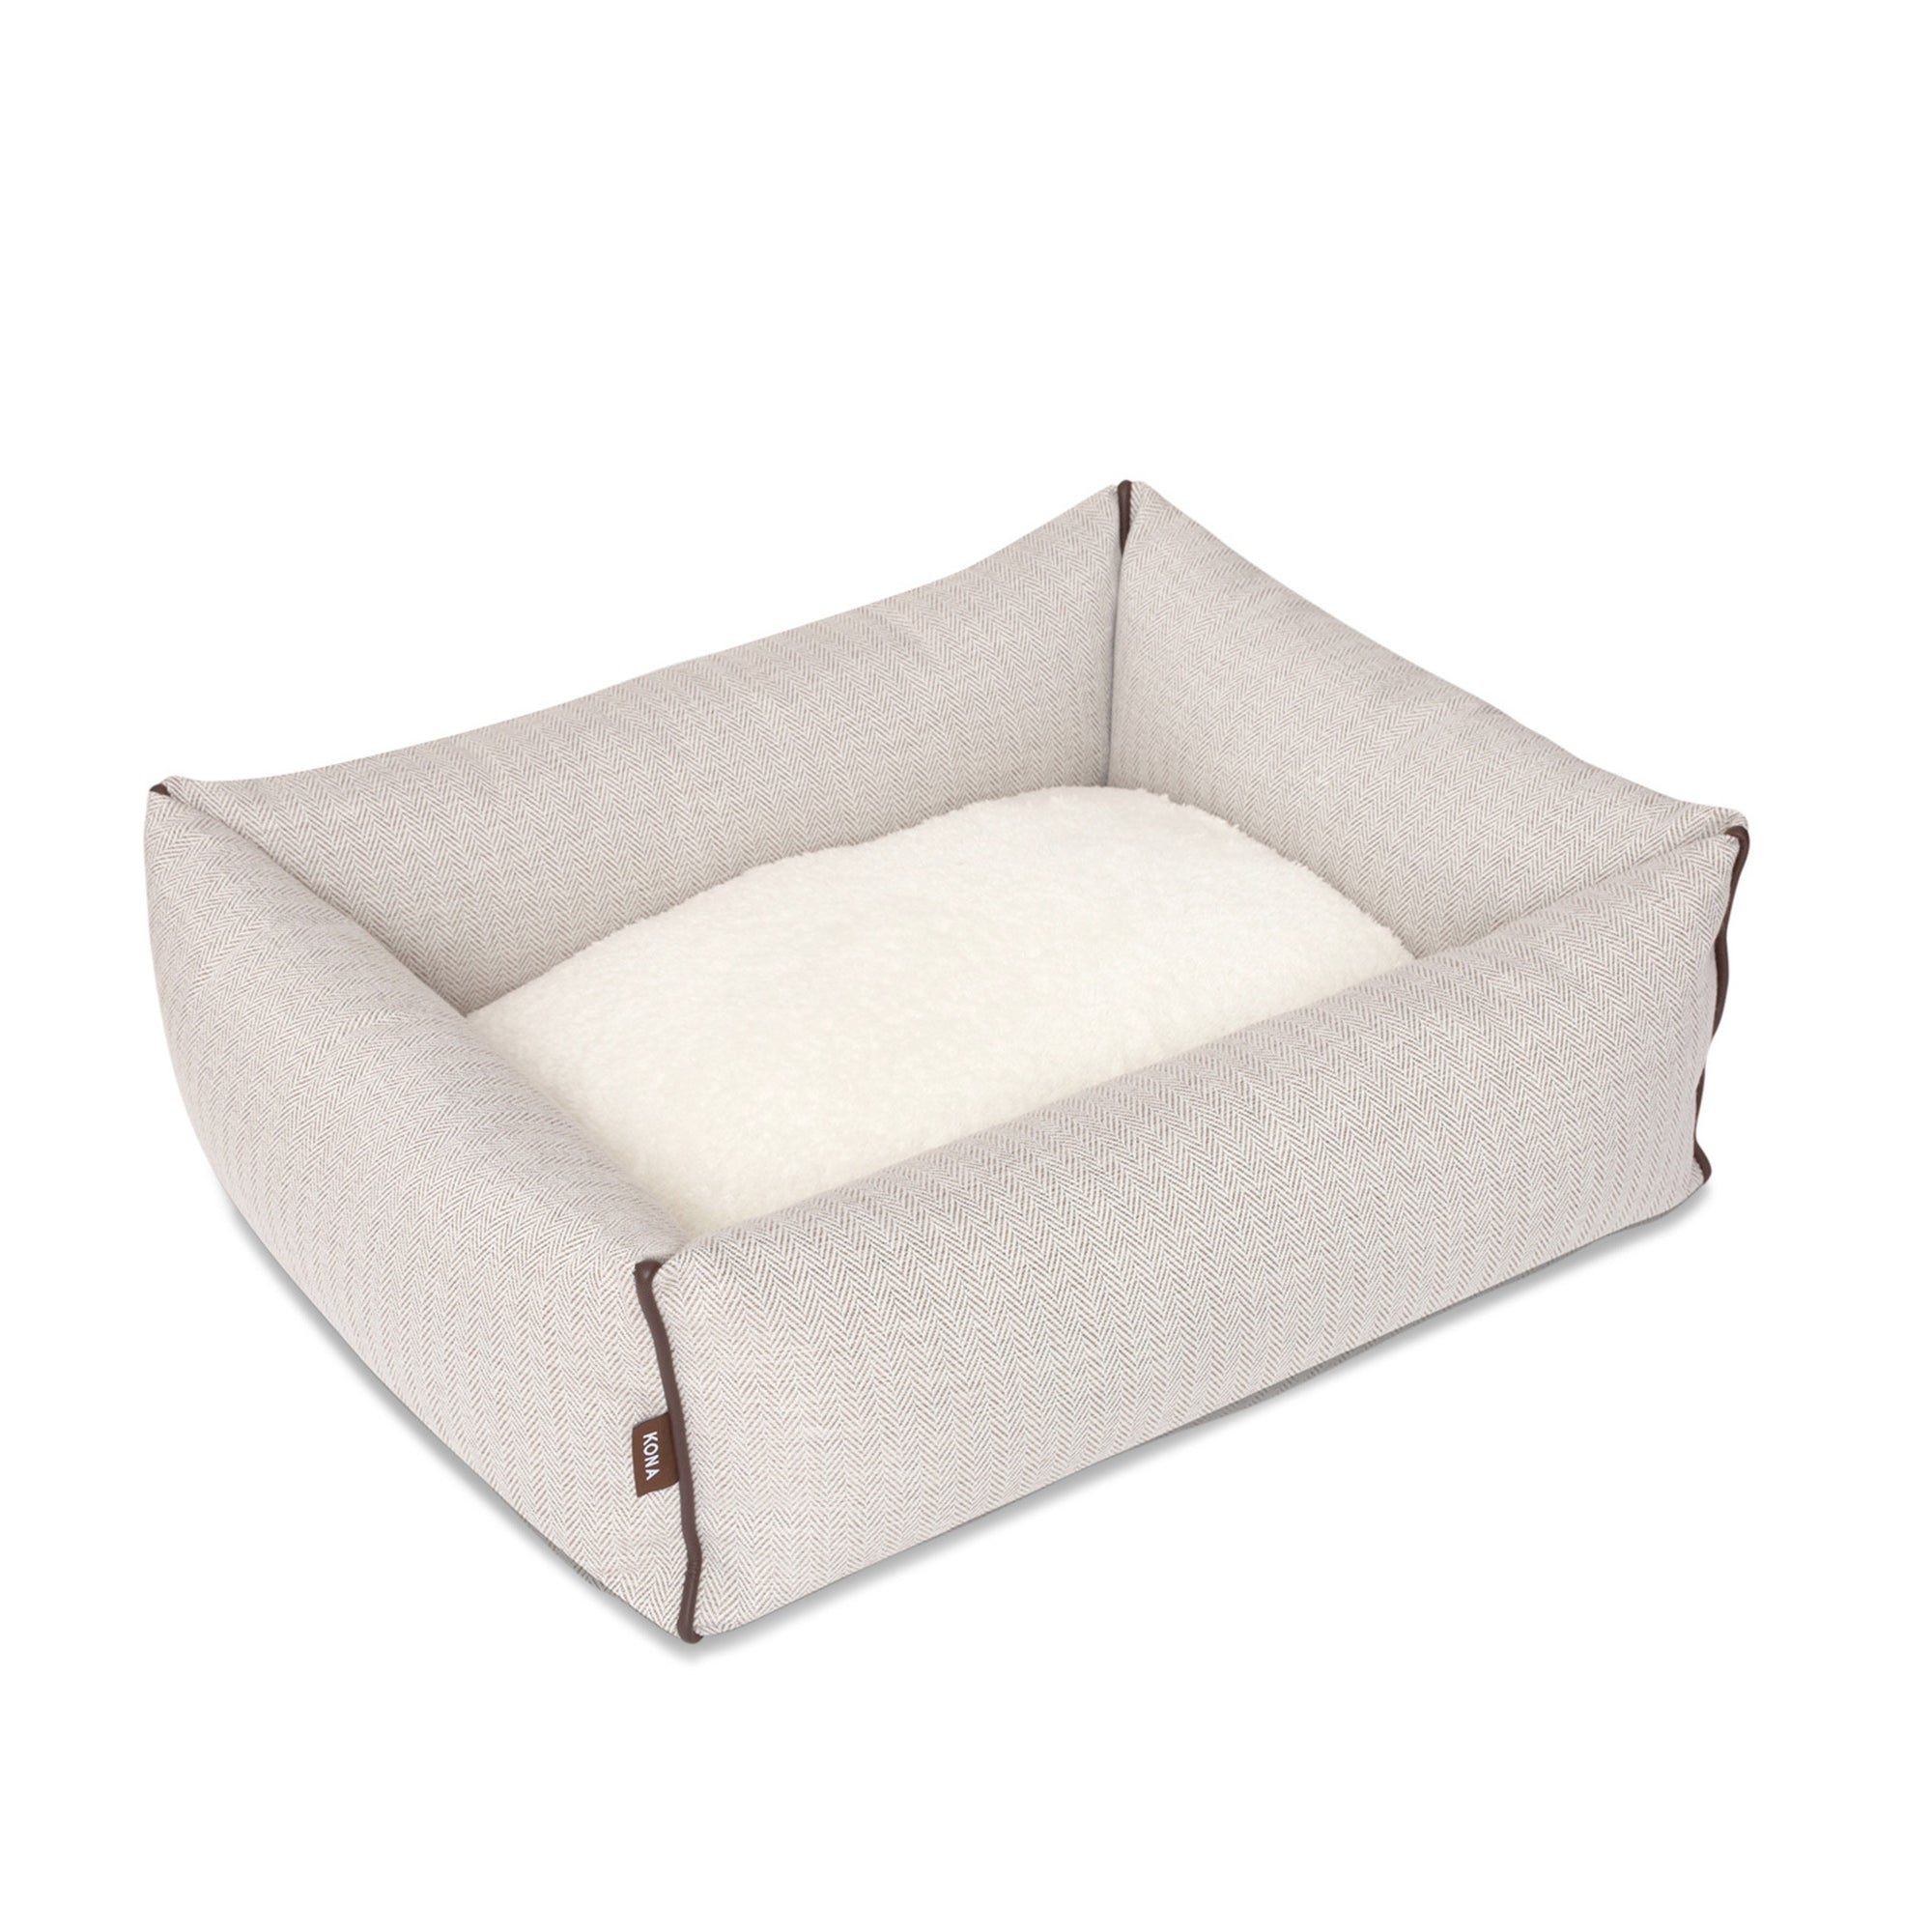 KONA CAVE® luxury bolster dog bed in elegant cream herringbone fabric. Schönes Hundebett.